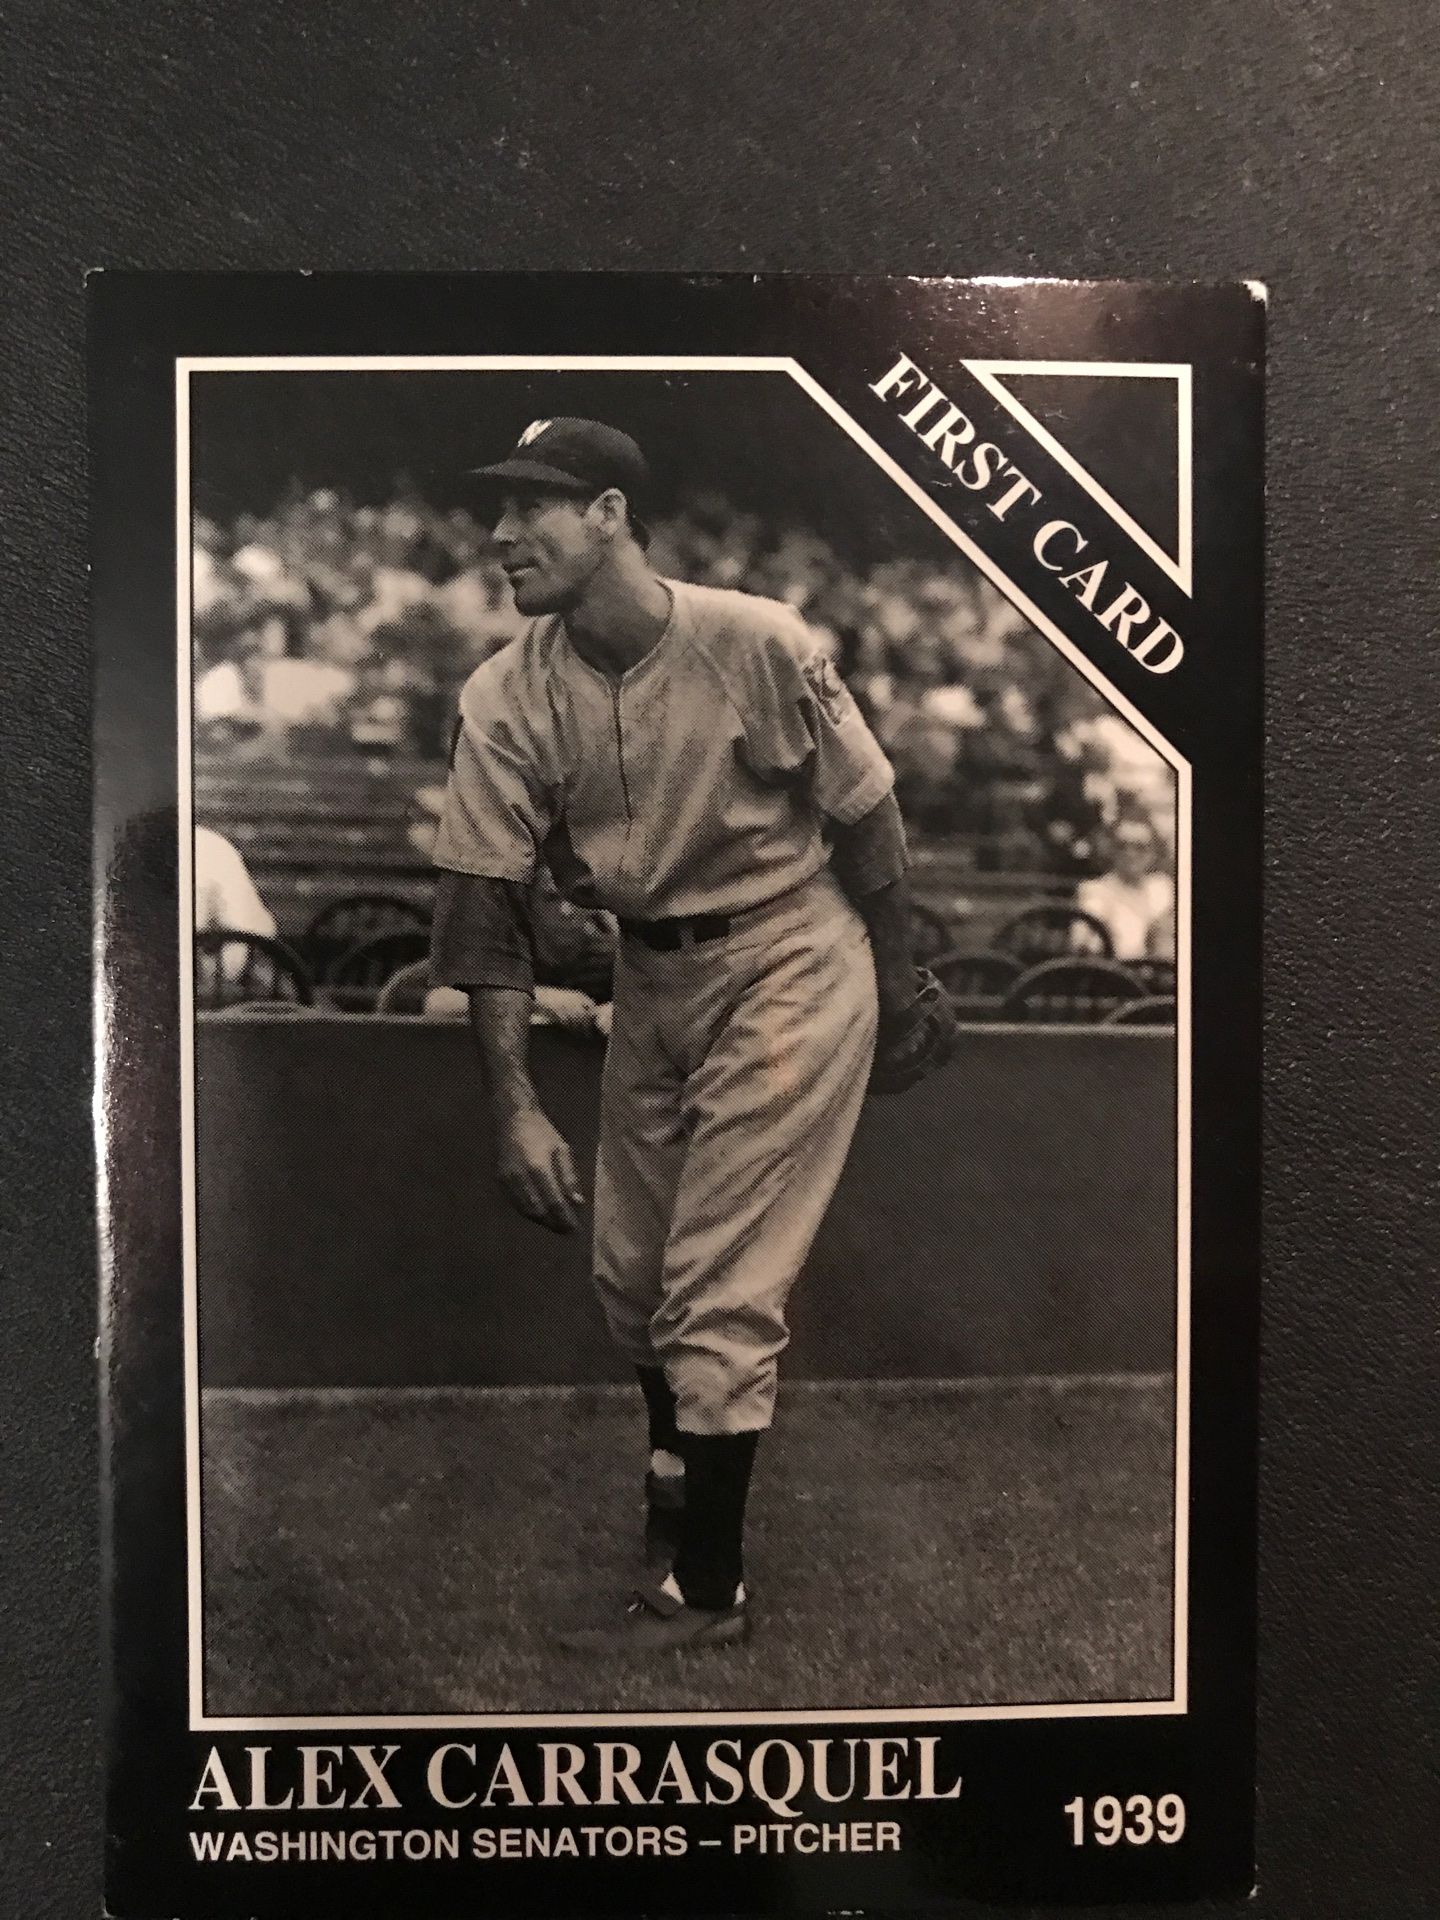 Old baseball card